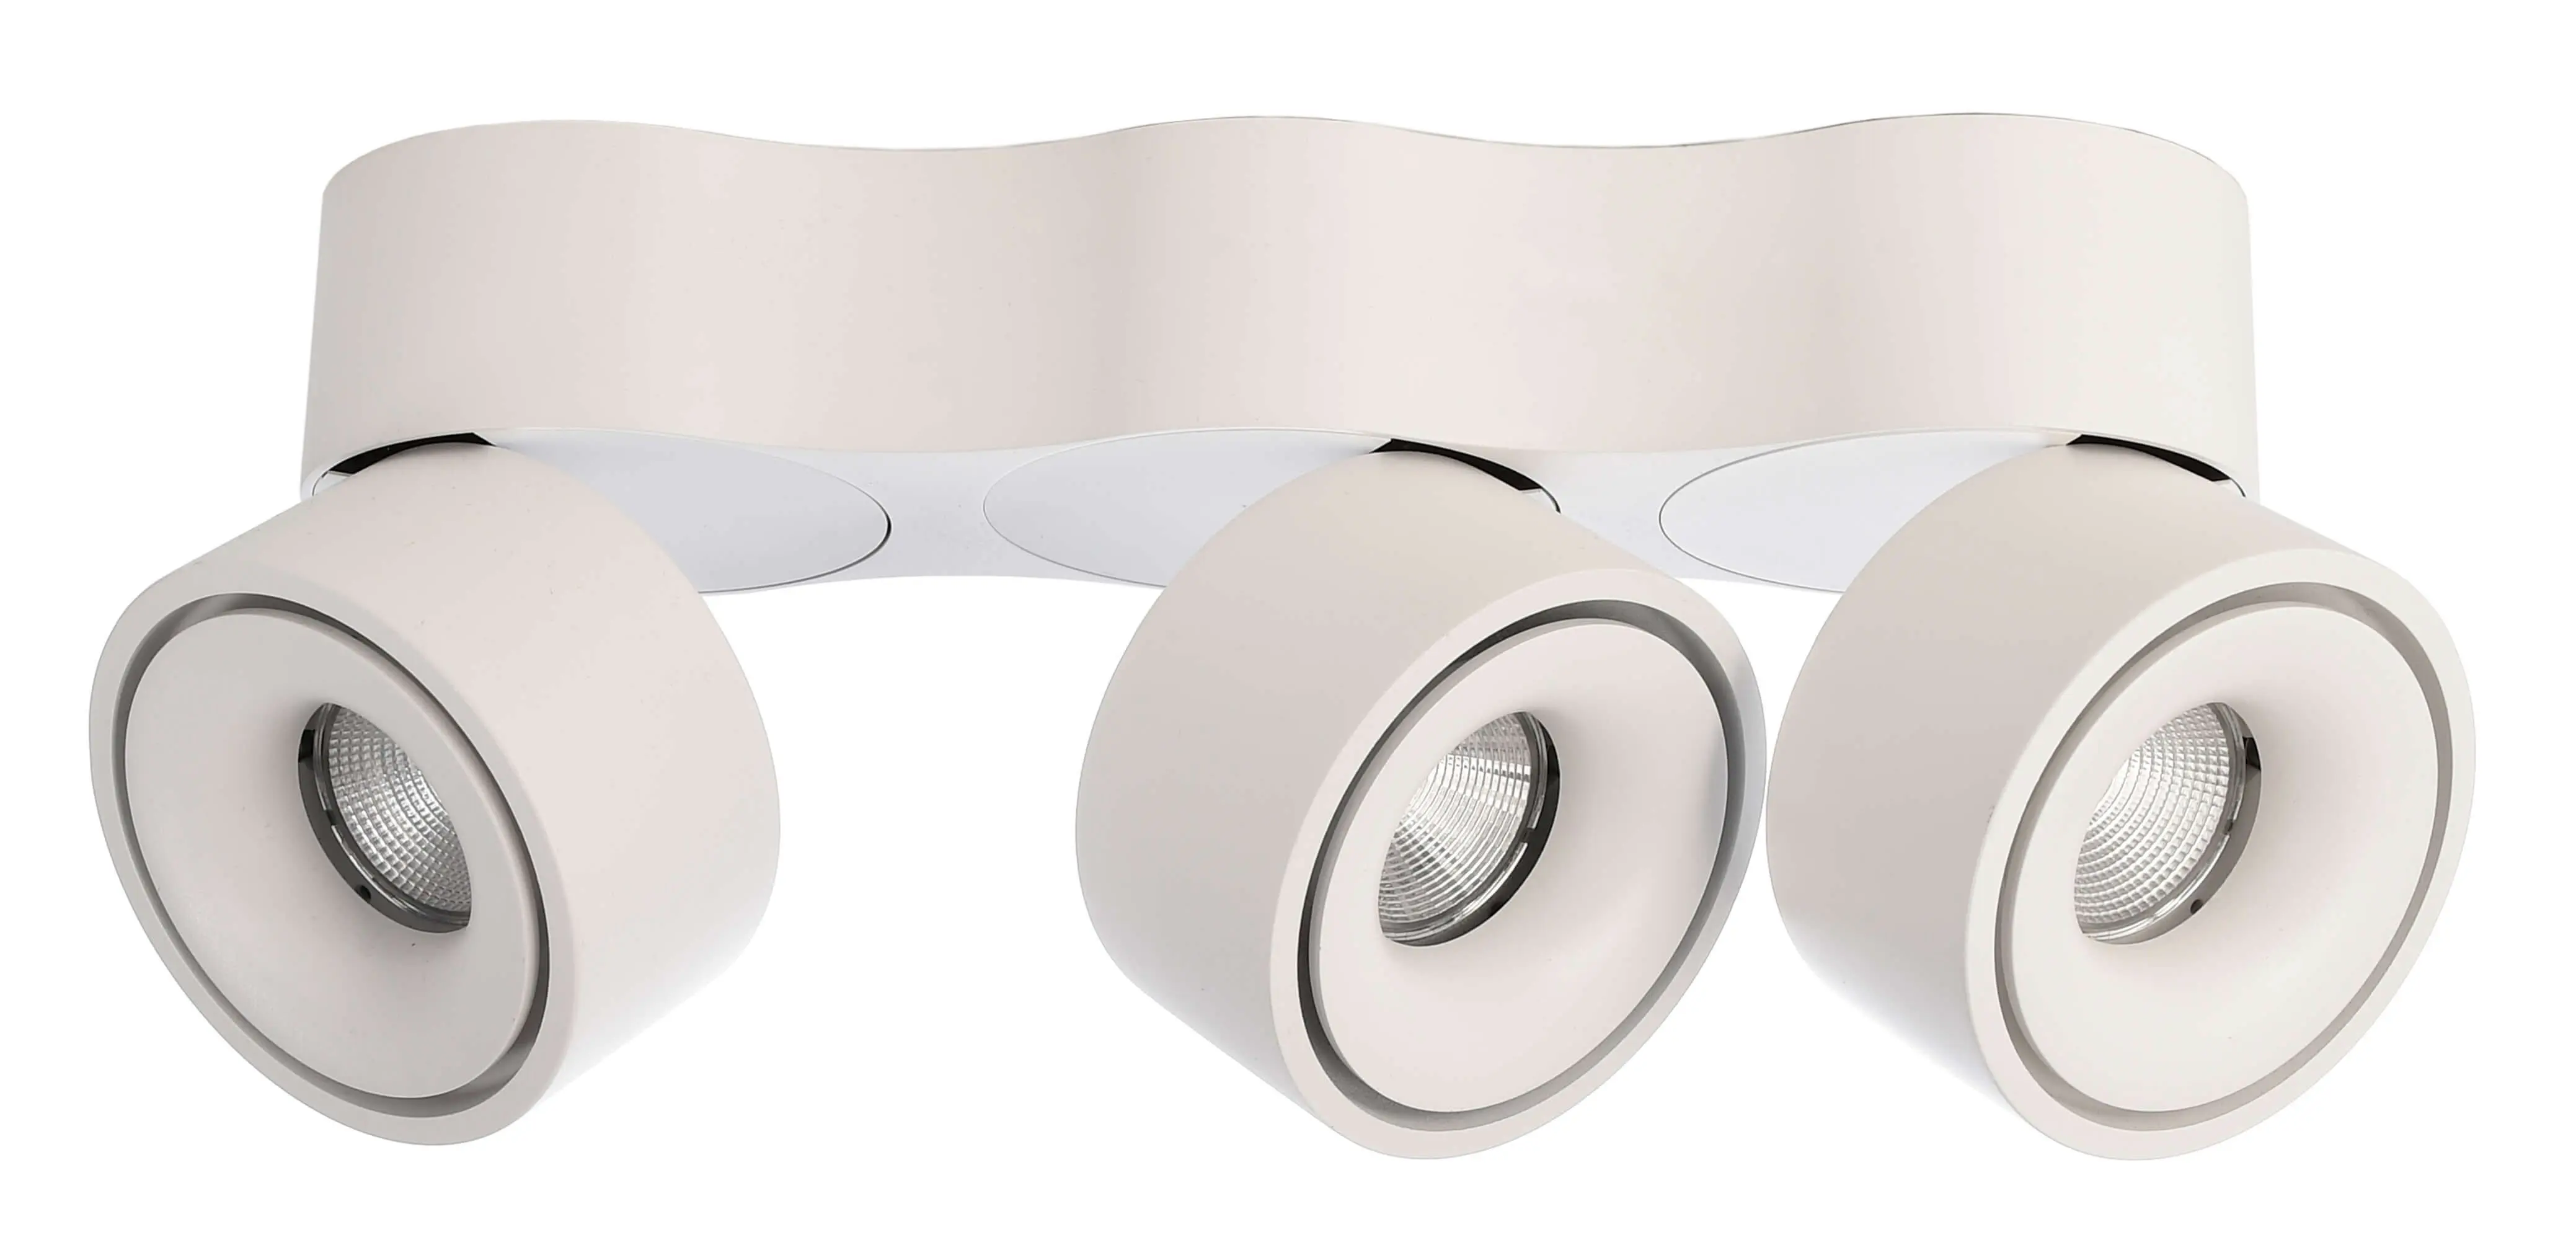 LED-Deckenlampe Uni Triple Flex in weiß 30W 3000K